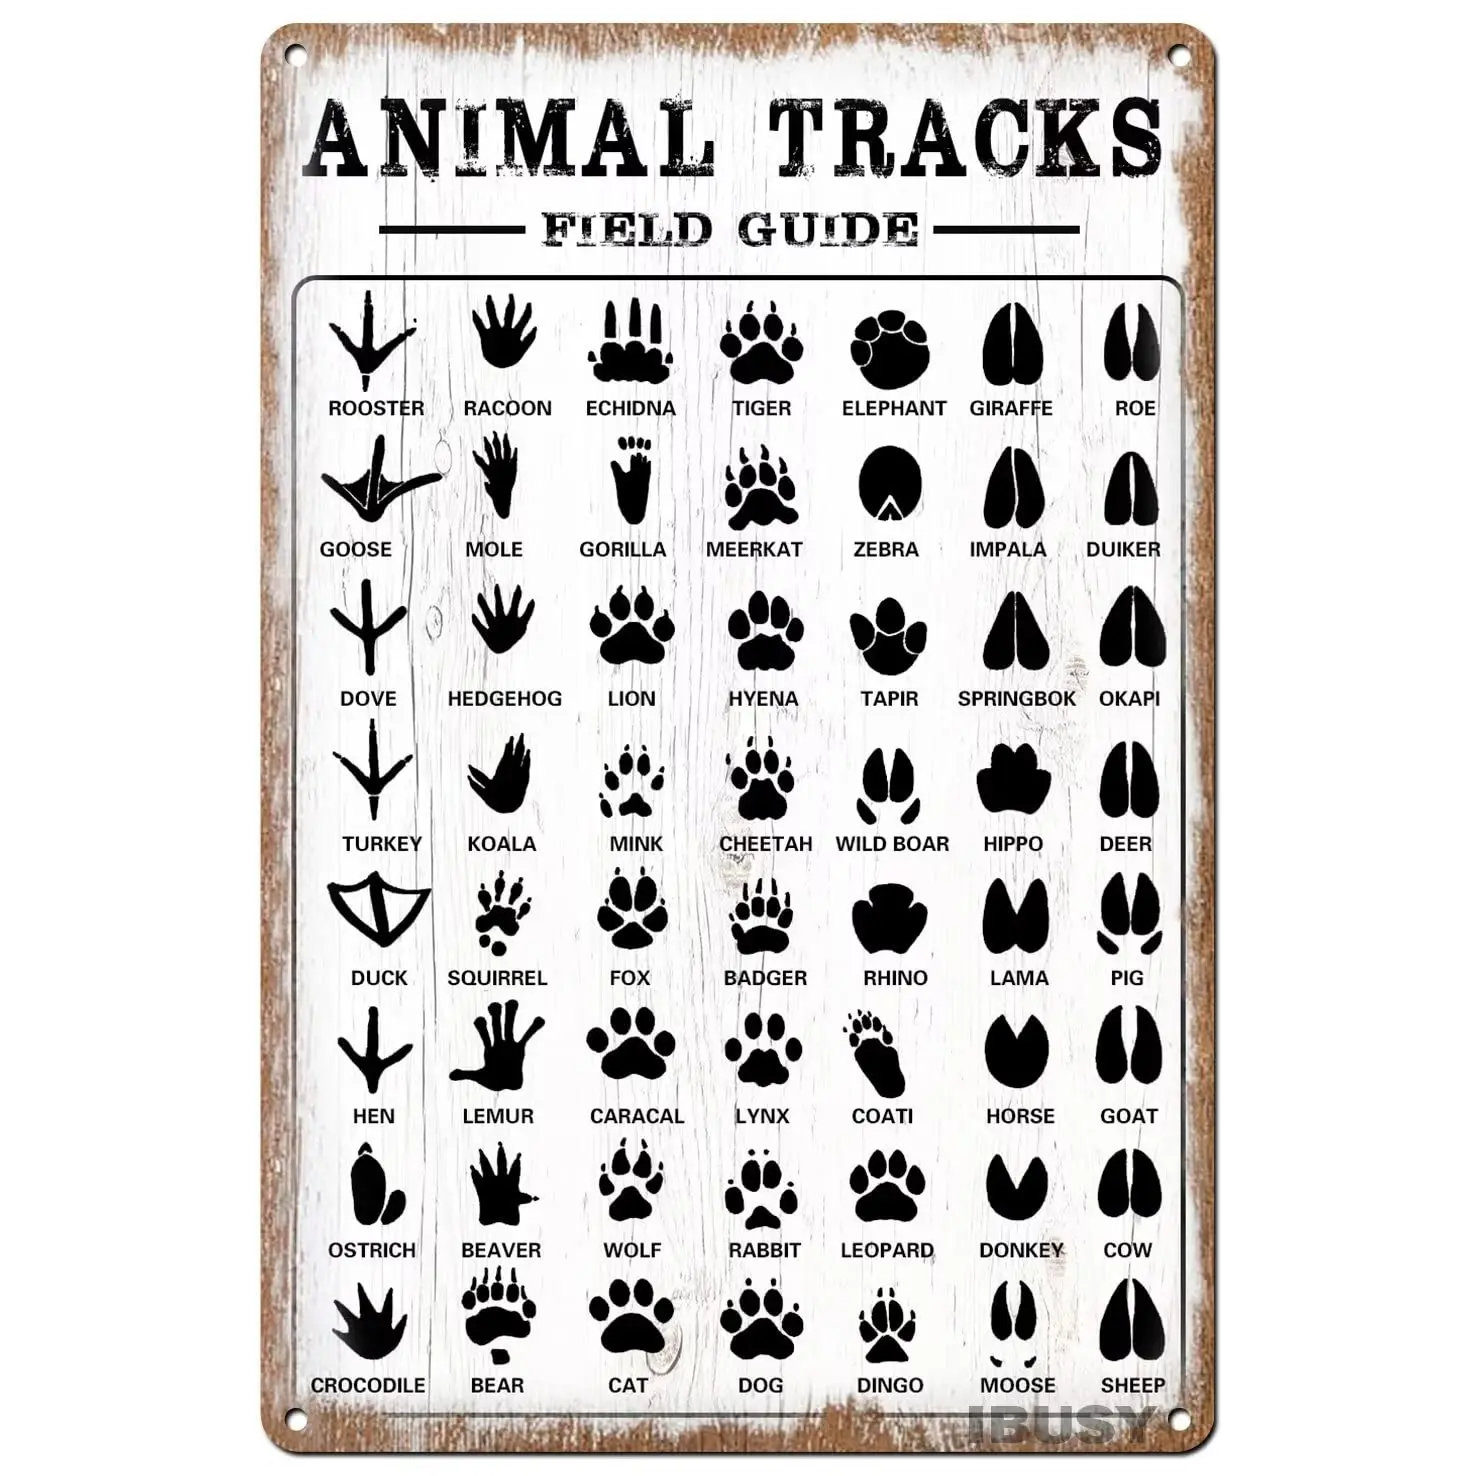 

Funny Retro Metal Tin Sign Animal Tracks Field Guide Farmhouse Home Rustic Decor Gifts - Woodland Nursery Decor Wall Art Decor